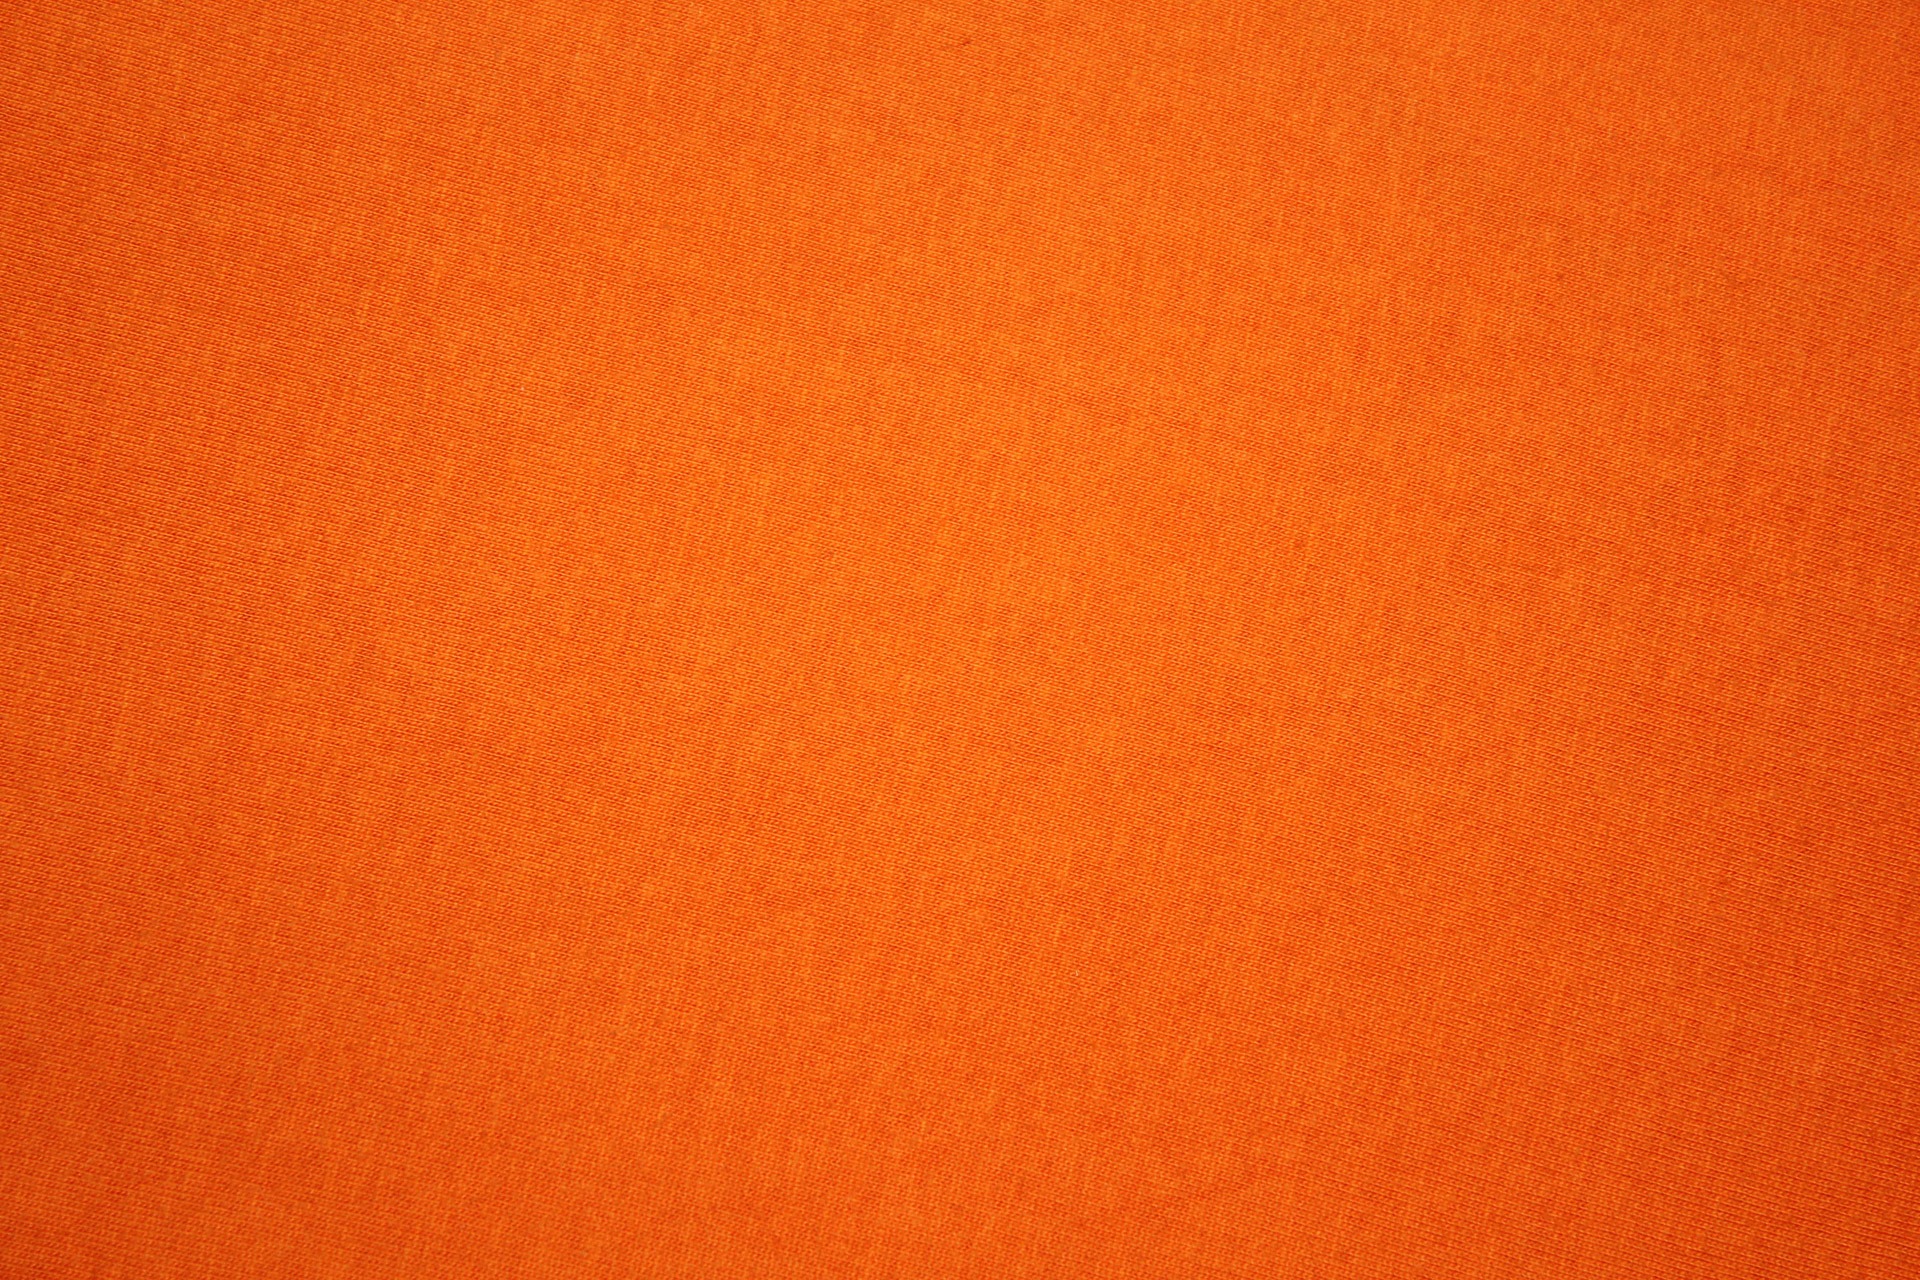 Orange textile texture free image